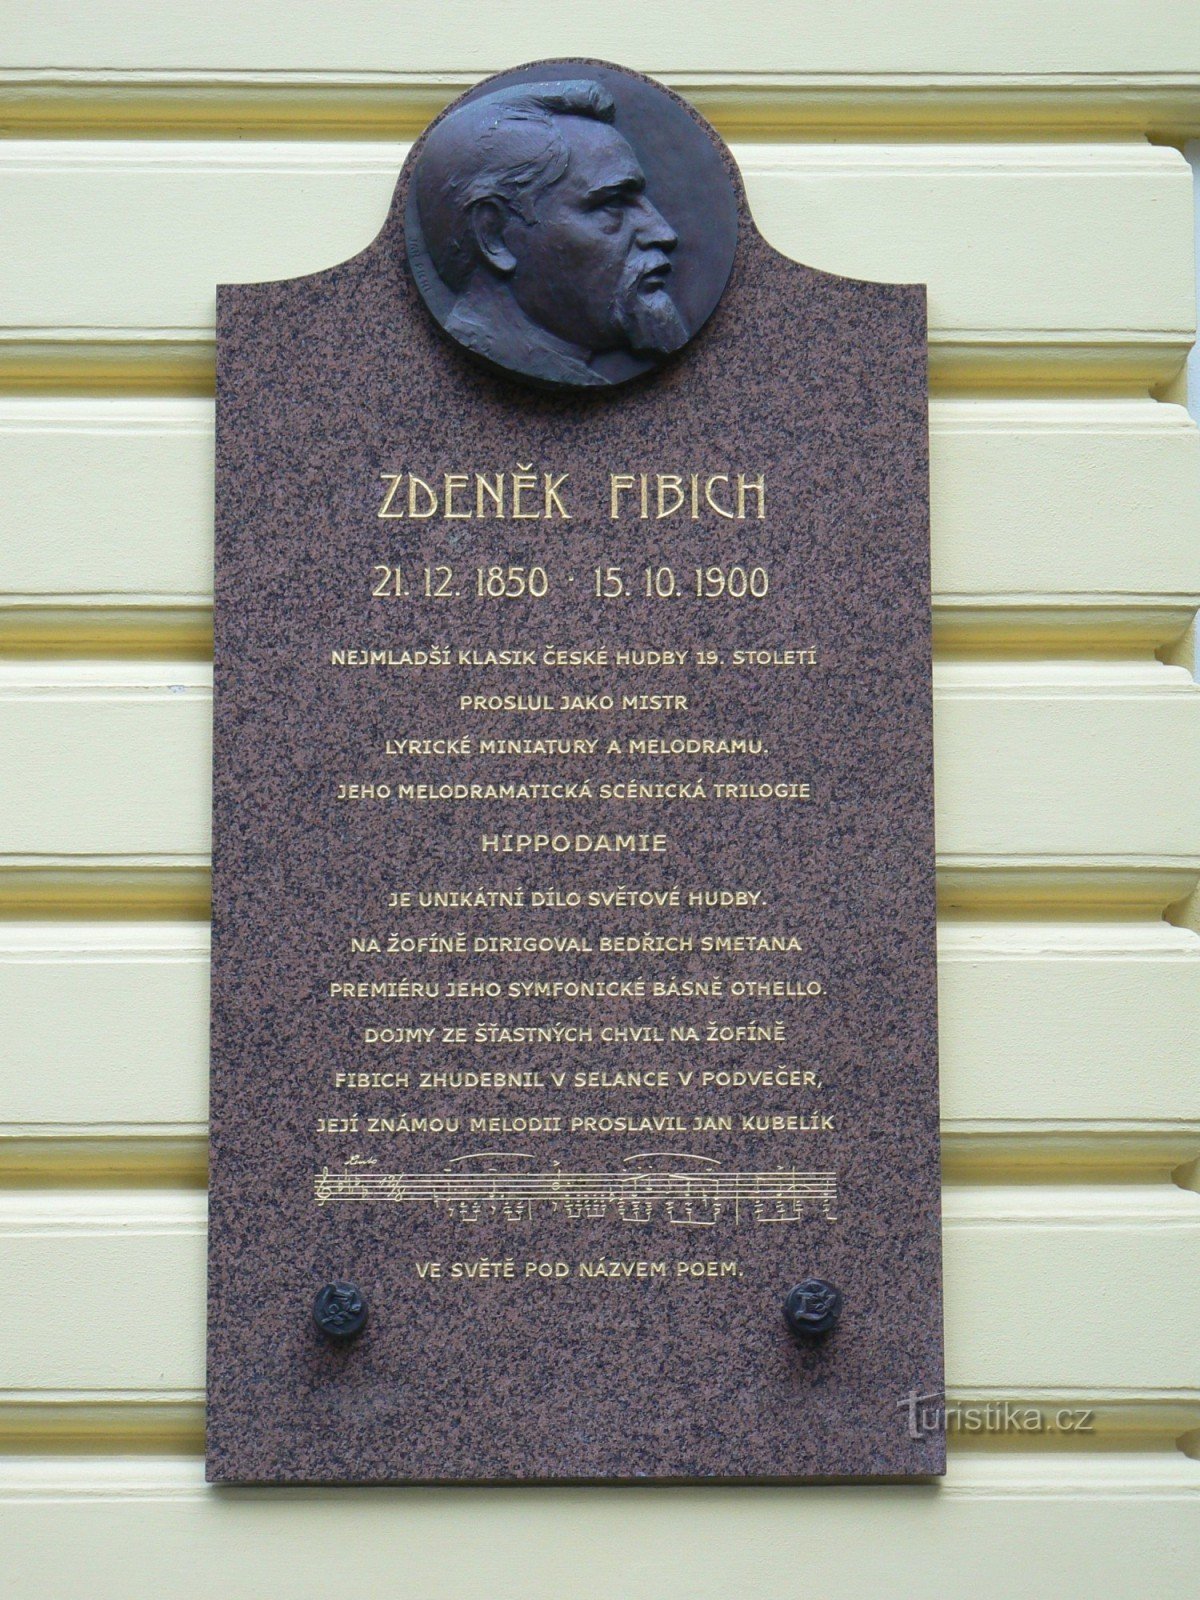 Placa comemorativa de Zdeněk Fibich